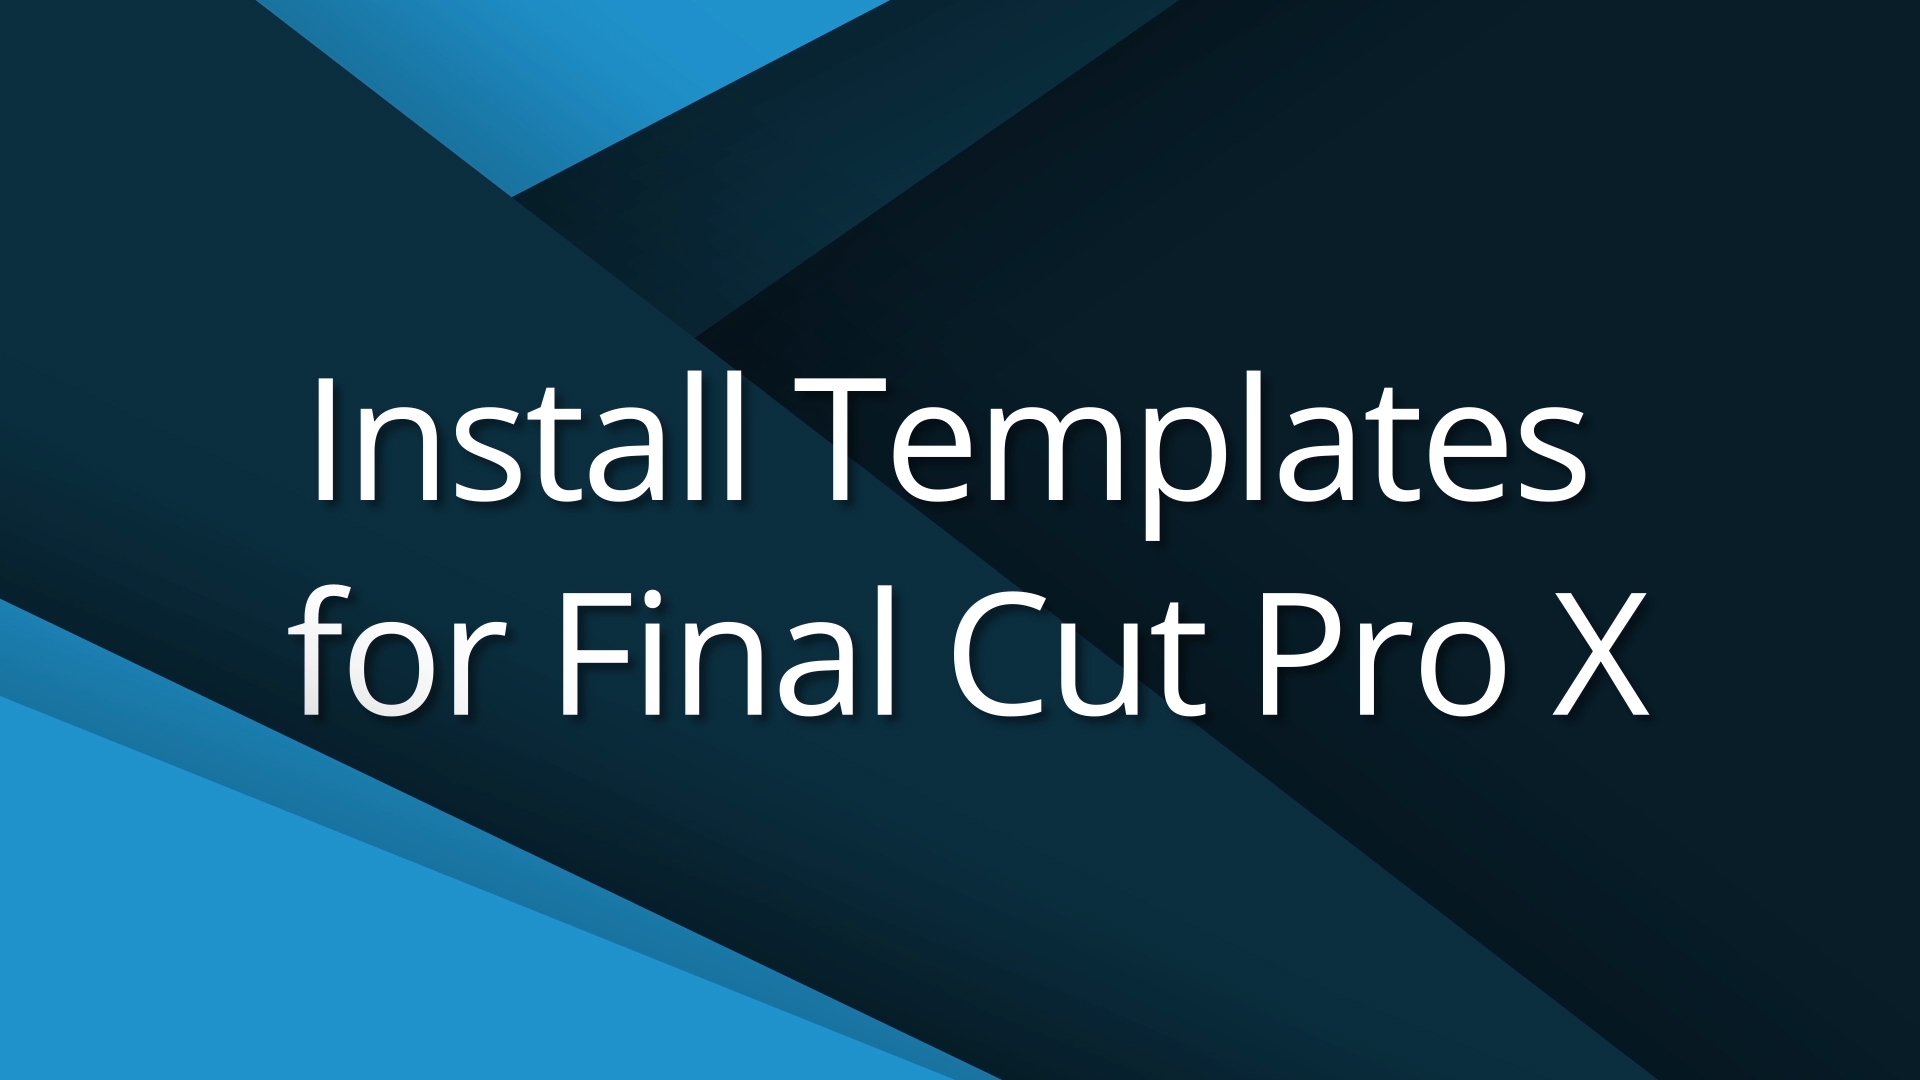 1) Install Final Cut Templates Video Tutorial